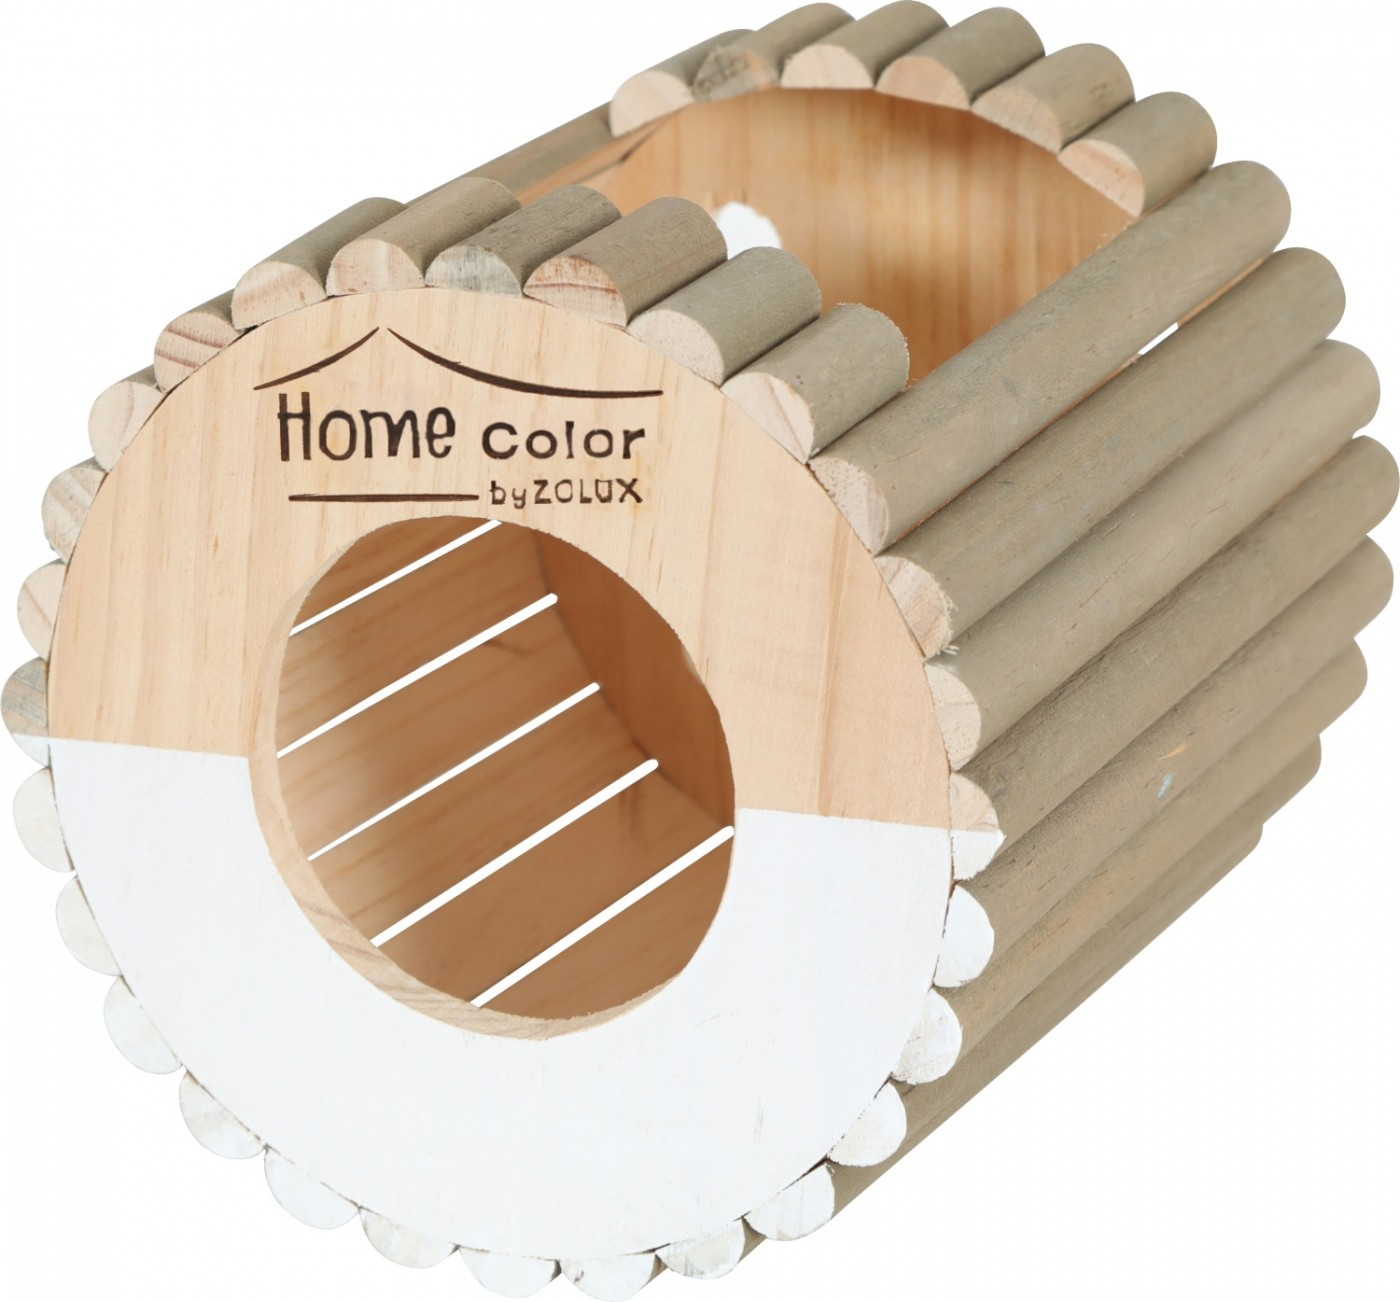 Holzhaus für rundes Nagetier - Home color